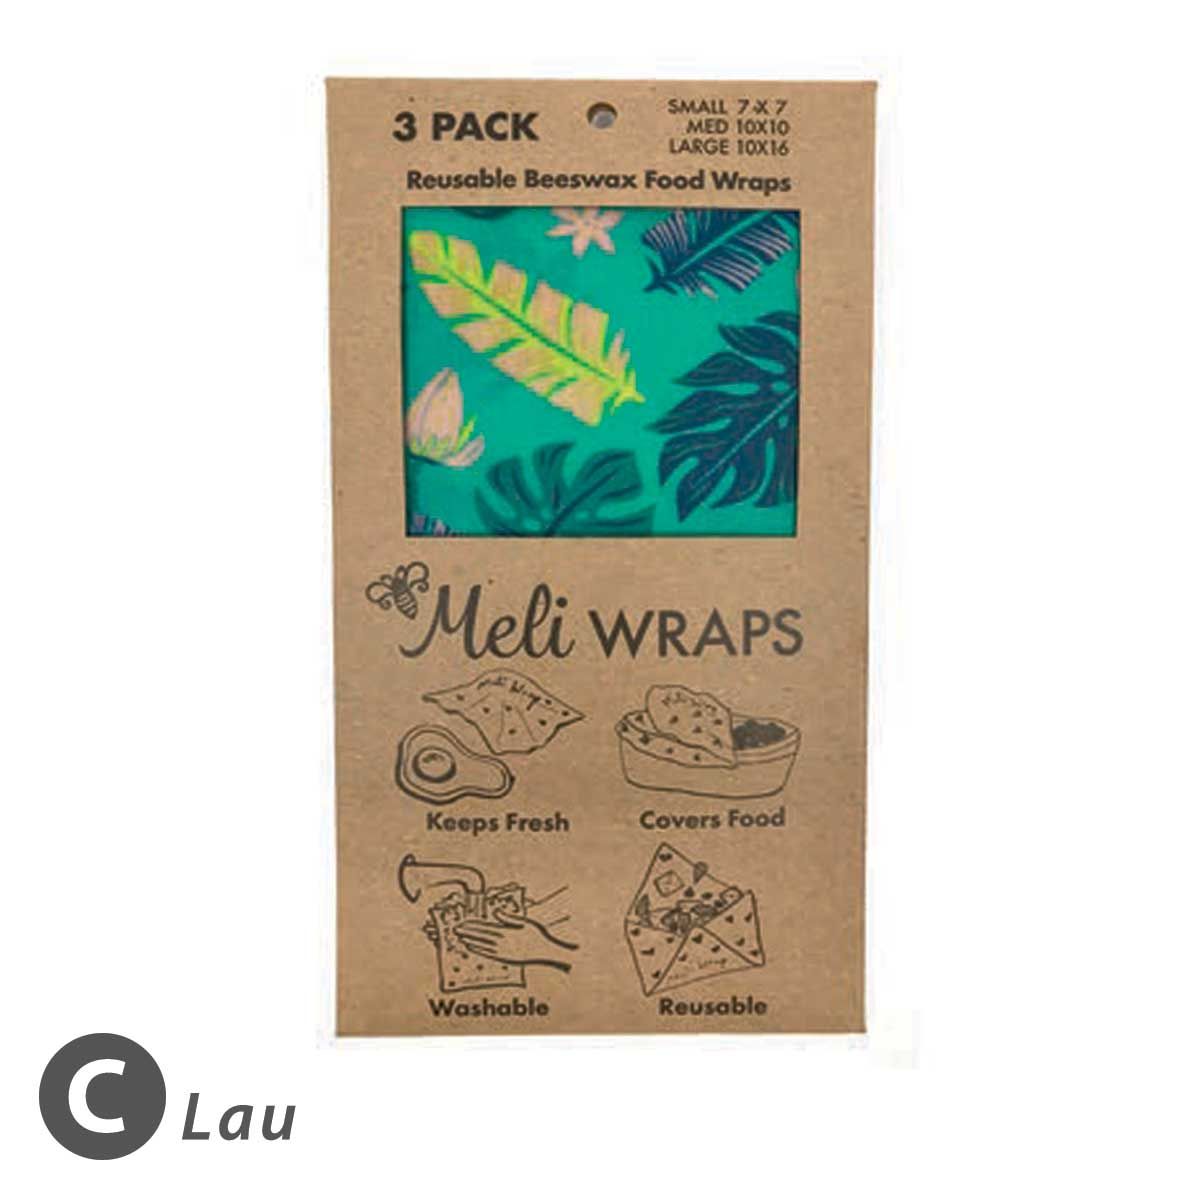 Meli Wraps Reusable and Eco-Friendly Beeswax Food Wraps - Lau